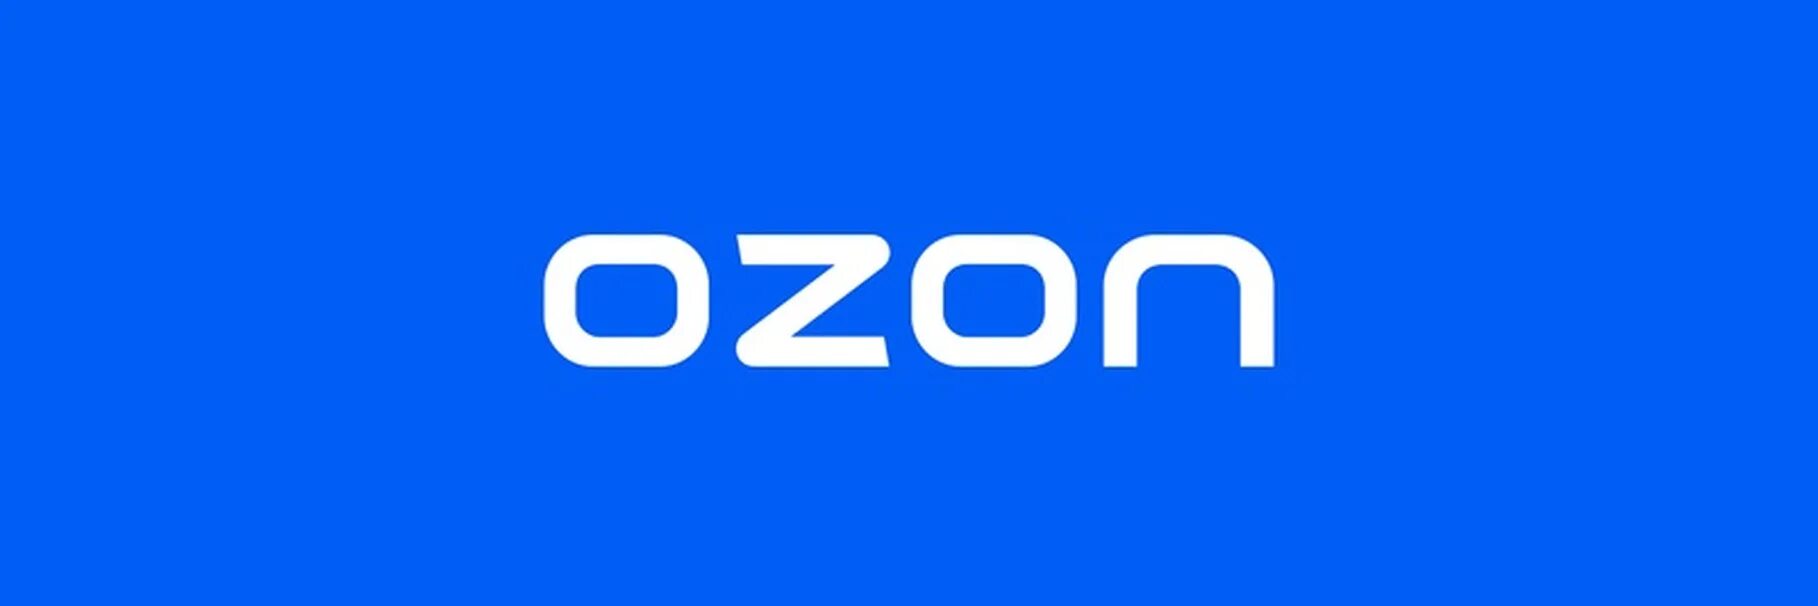 Ozon sports. Озон логотип. Надпись Озон. Магазин Озон логотип. Логотип Озон квадратный.